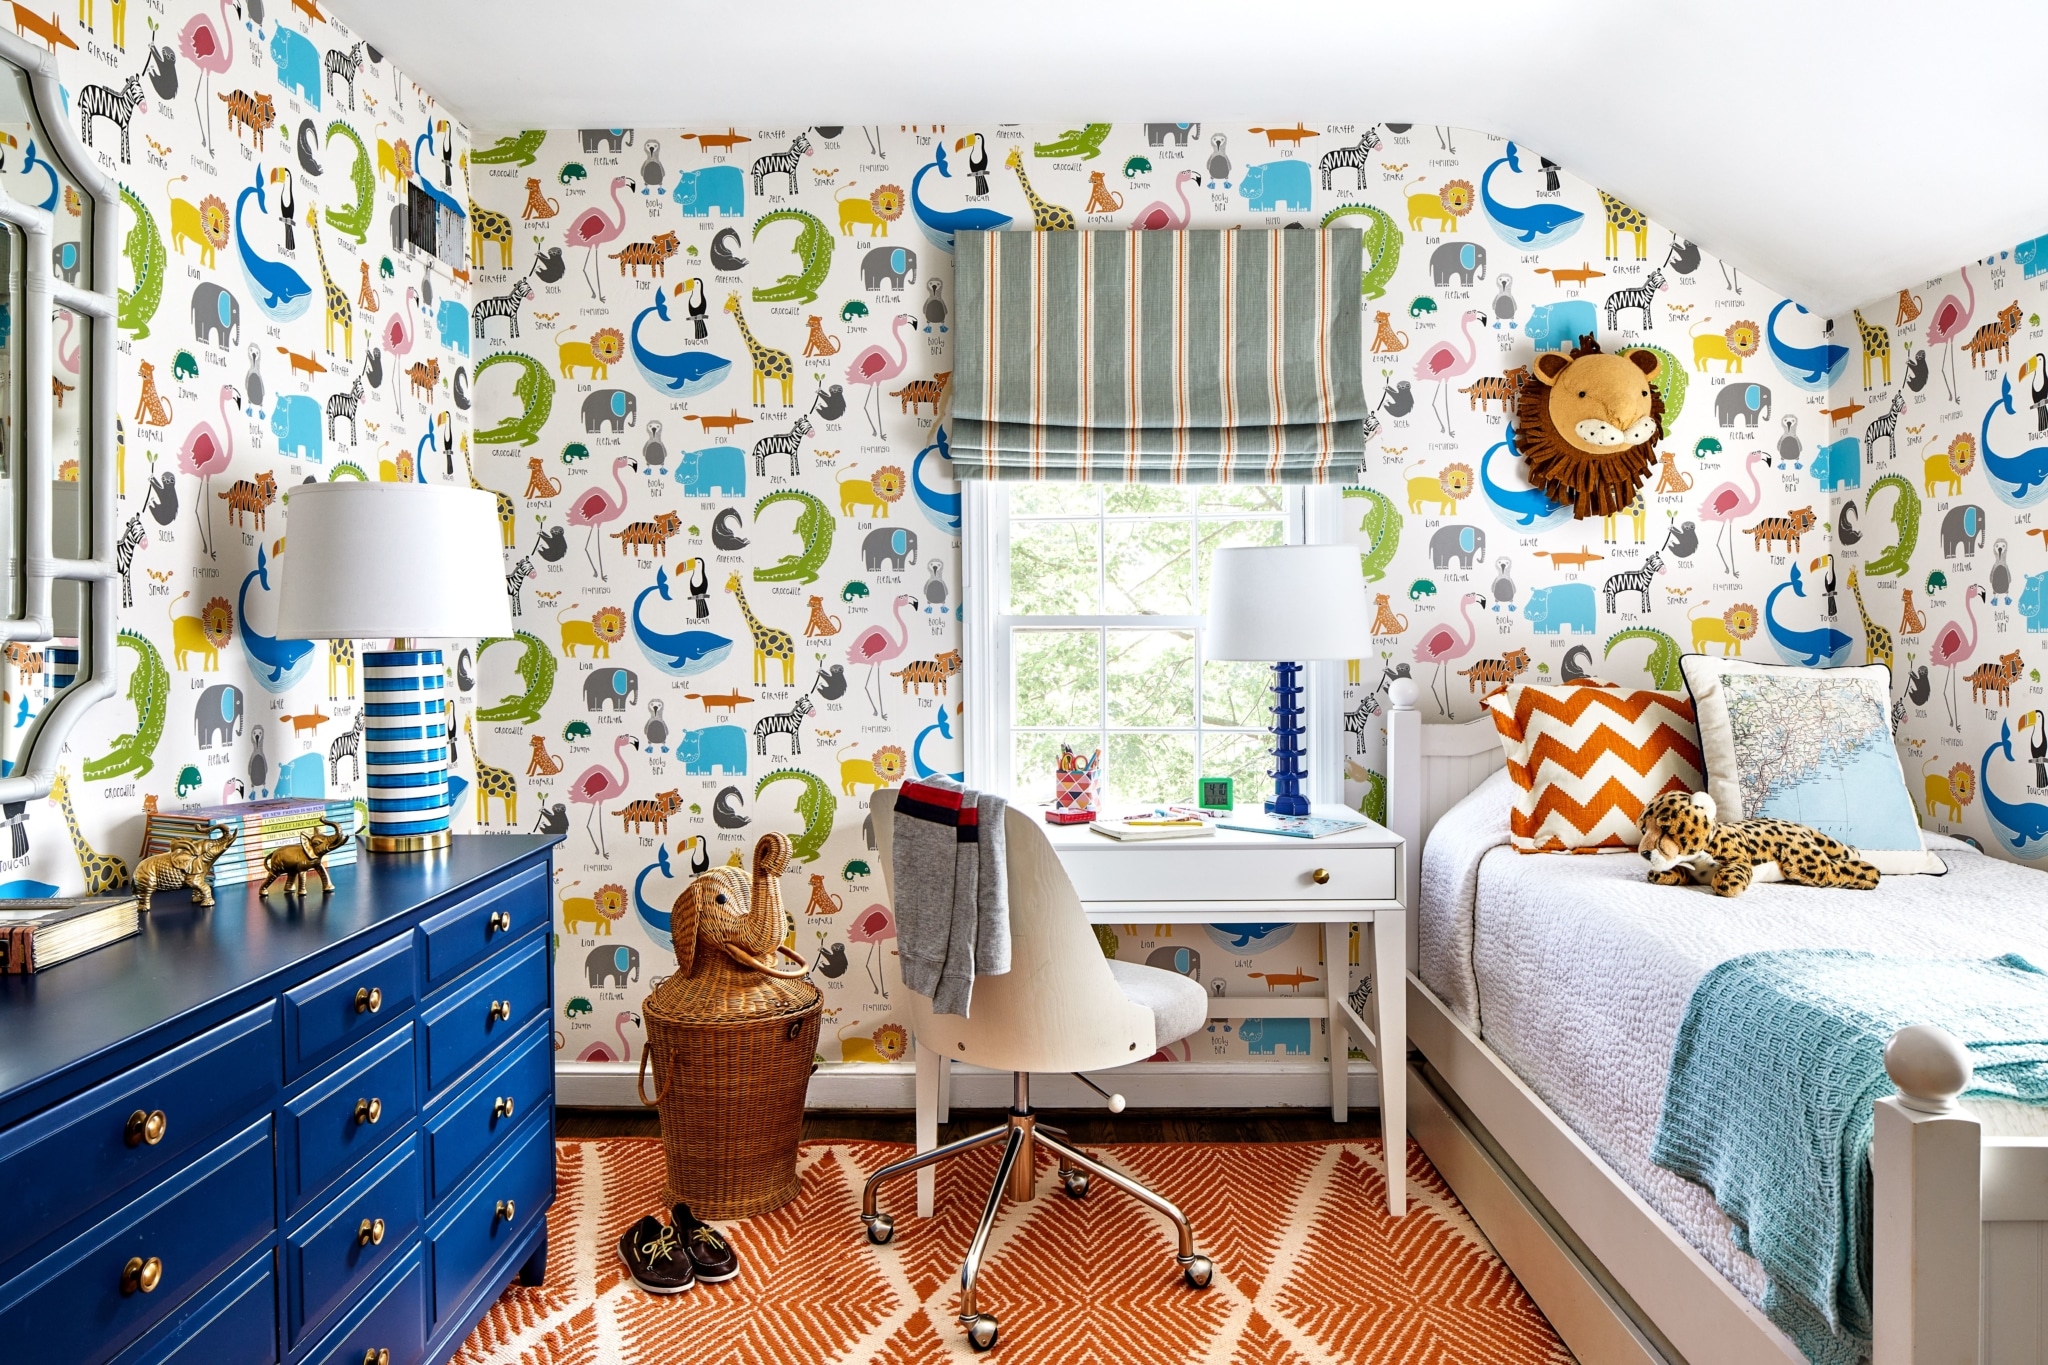 Designer Marika Meyer's child's bedroom